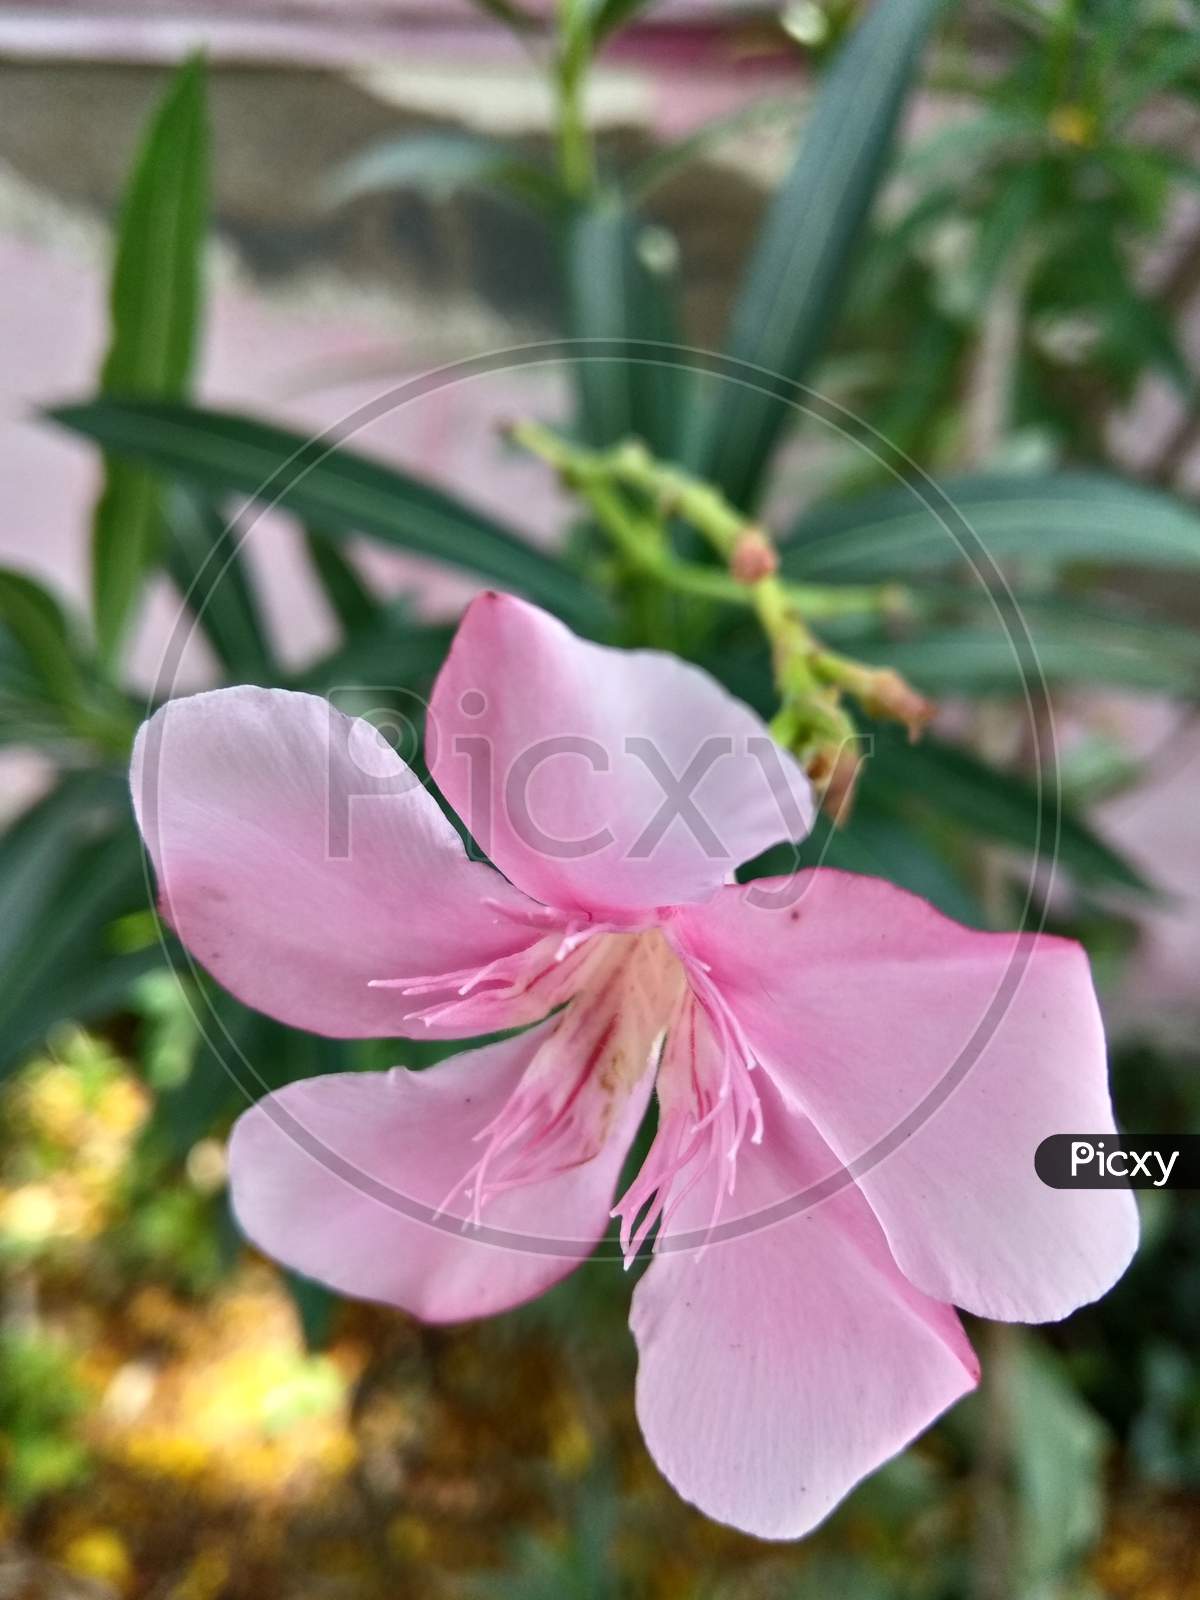 Pink flower bloom